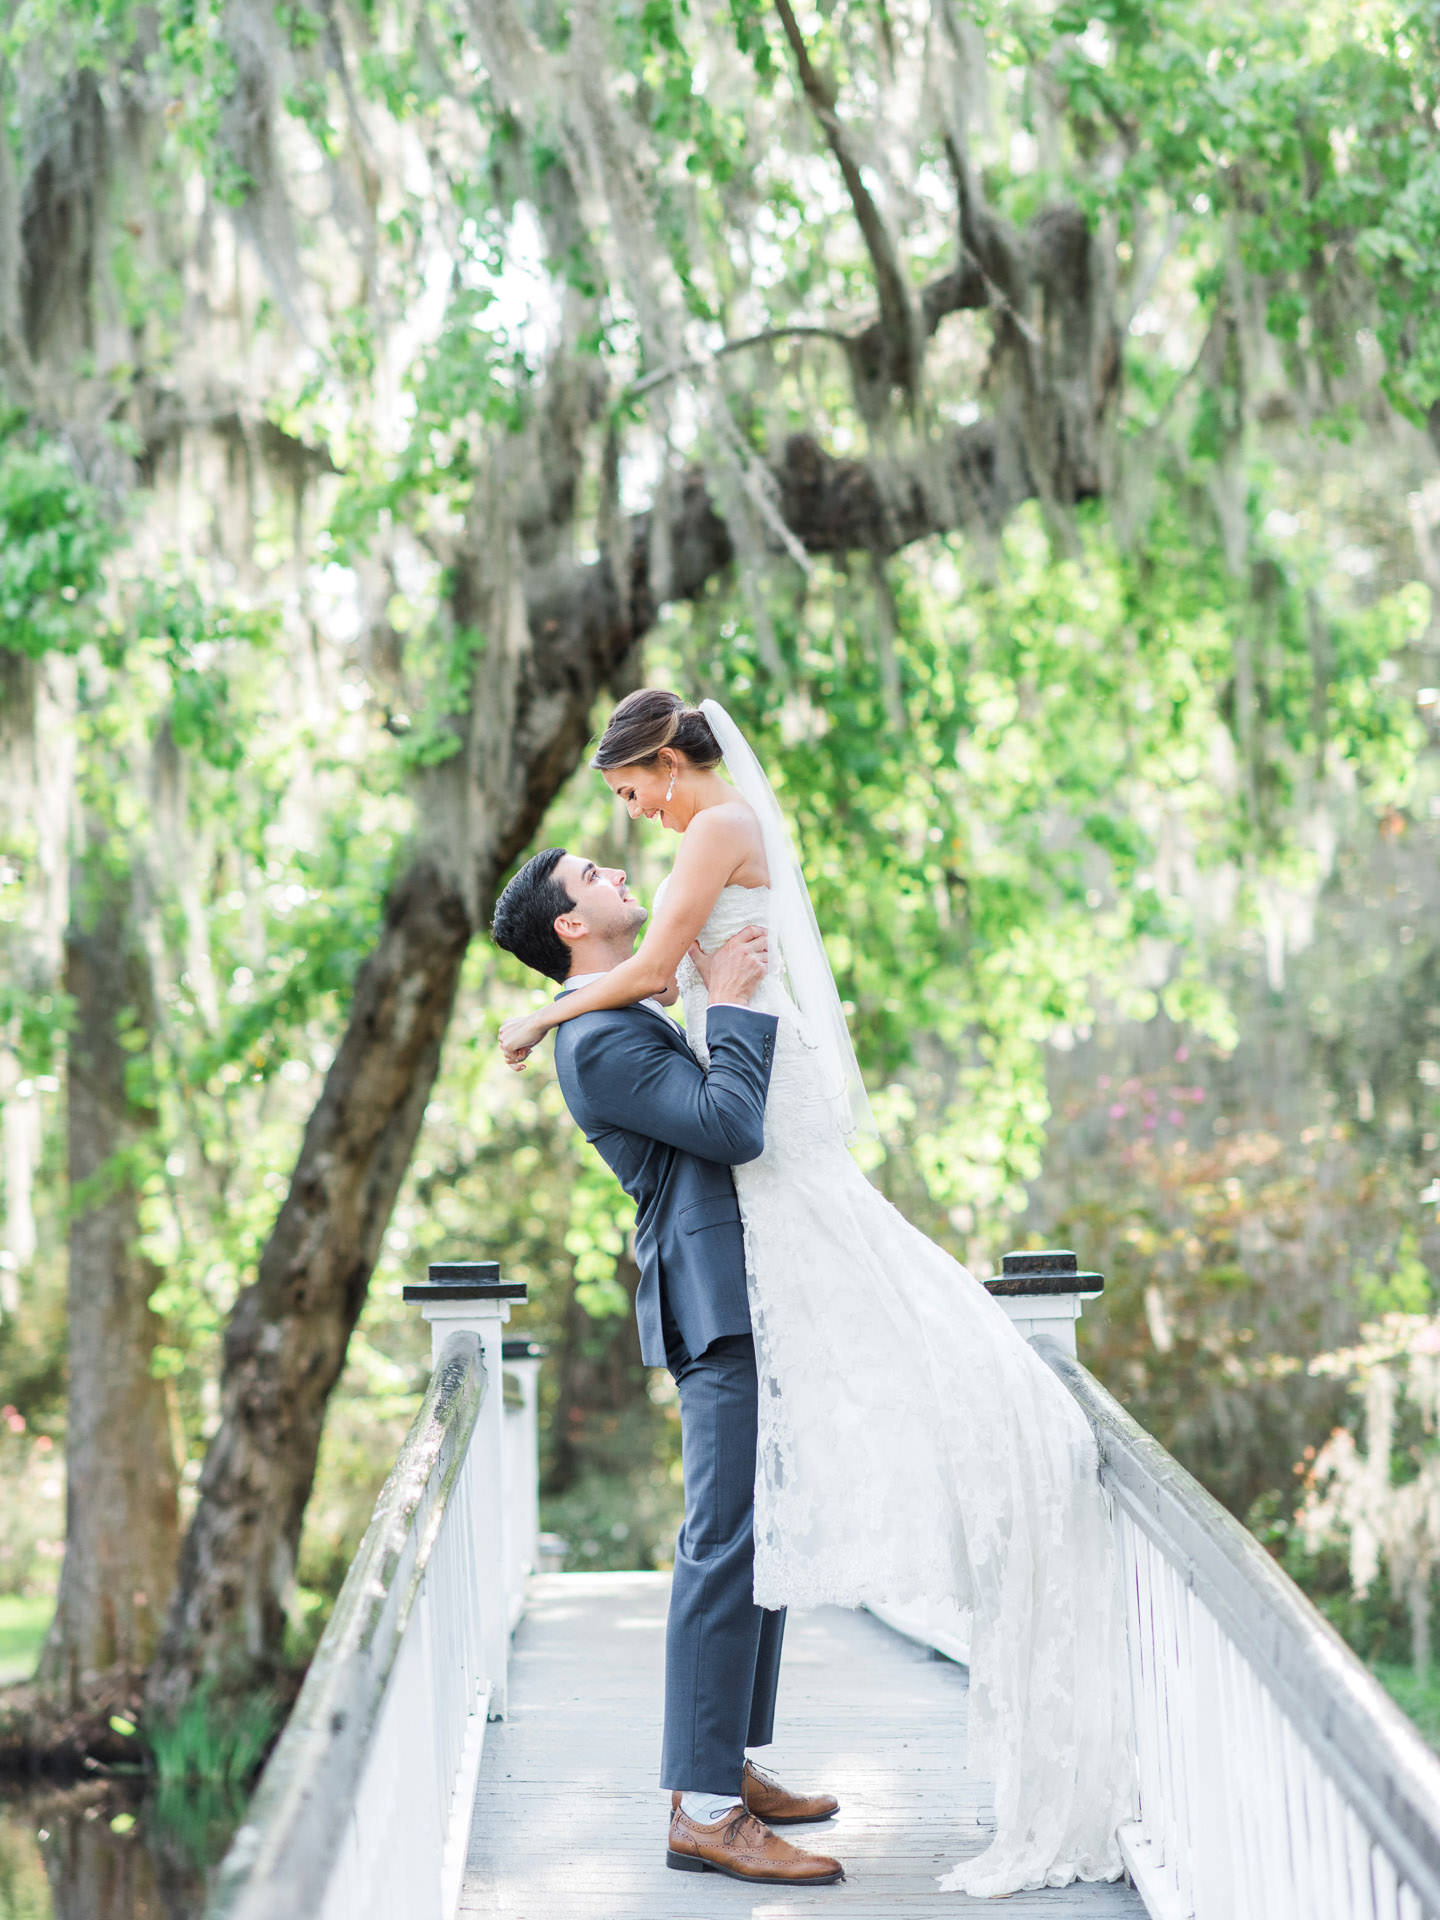 Groom lifting and twirling bride on Magnolia Plantation white bridge